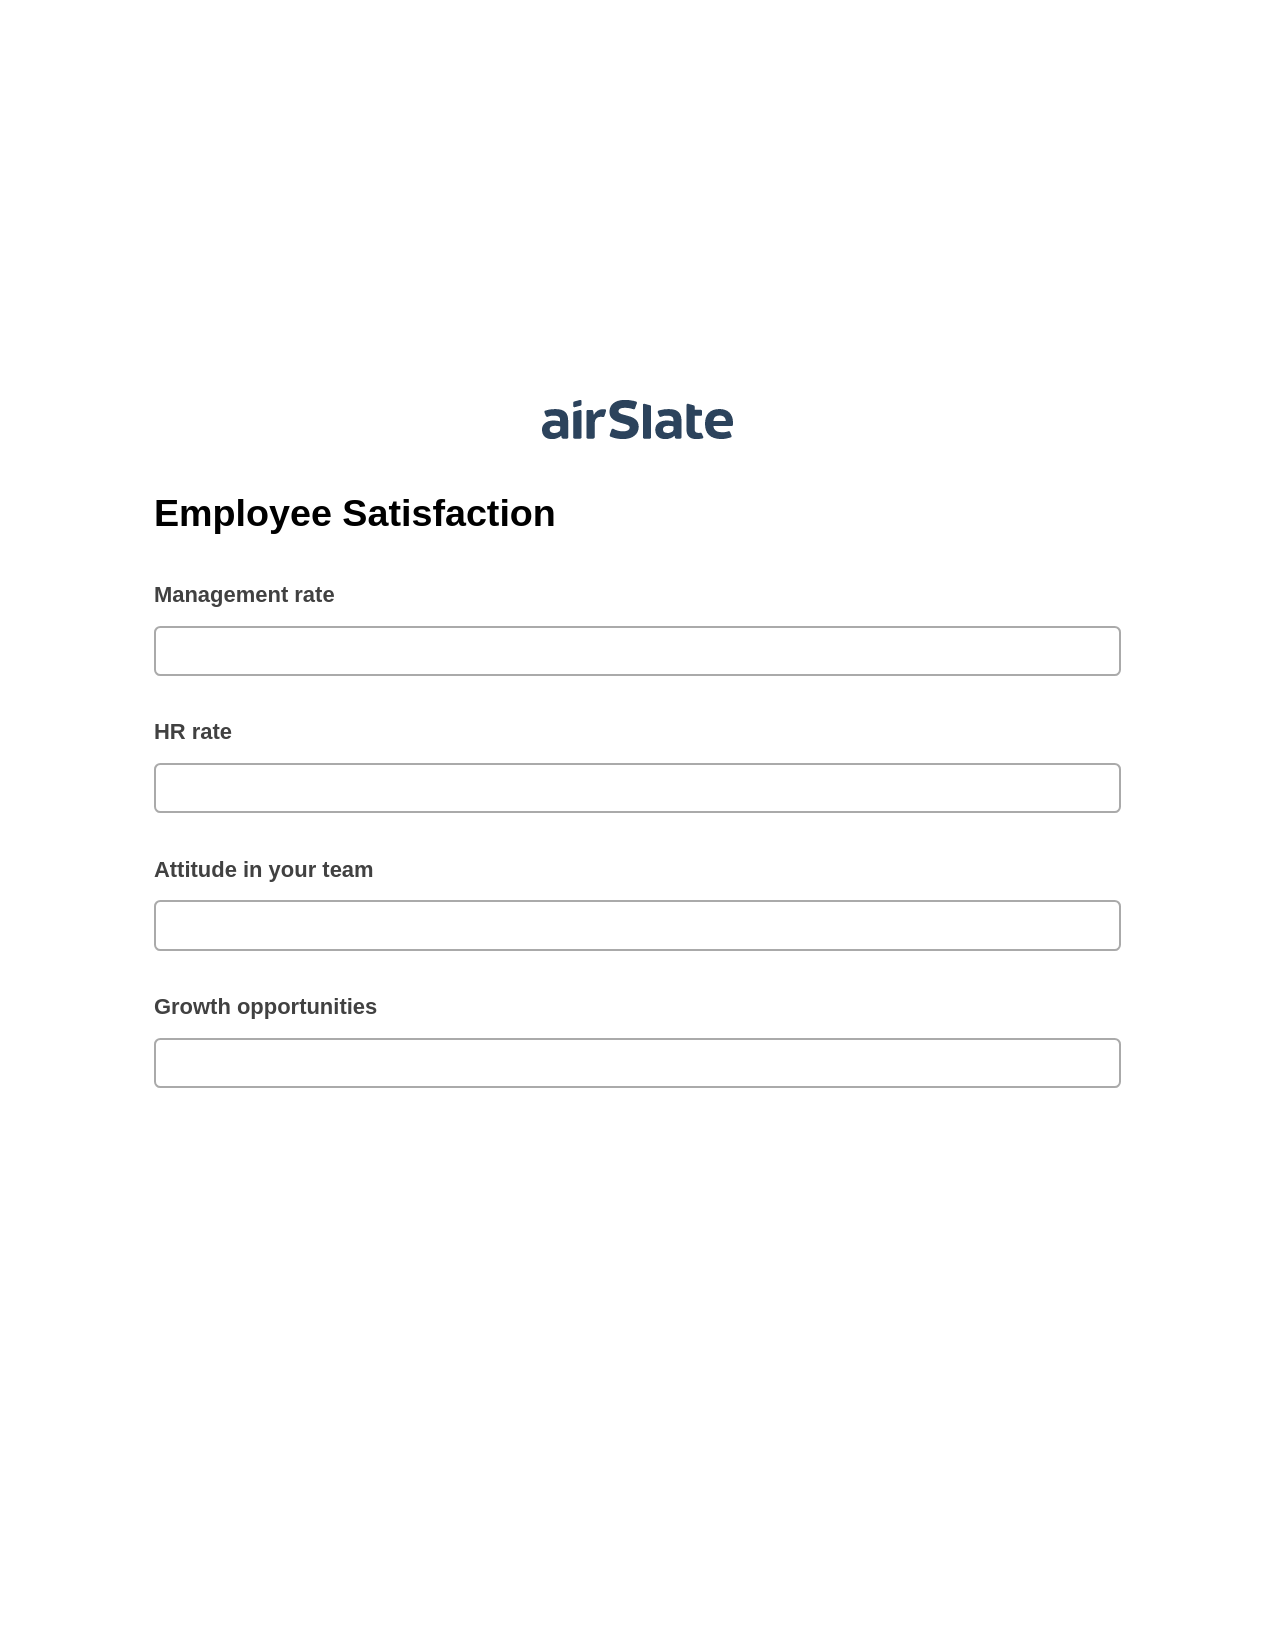 Employee Satisfaction Pre-fill from Salesforce Record Bot, SendGrid send Campaign bot, Google Drive Bot